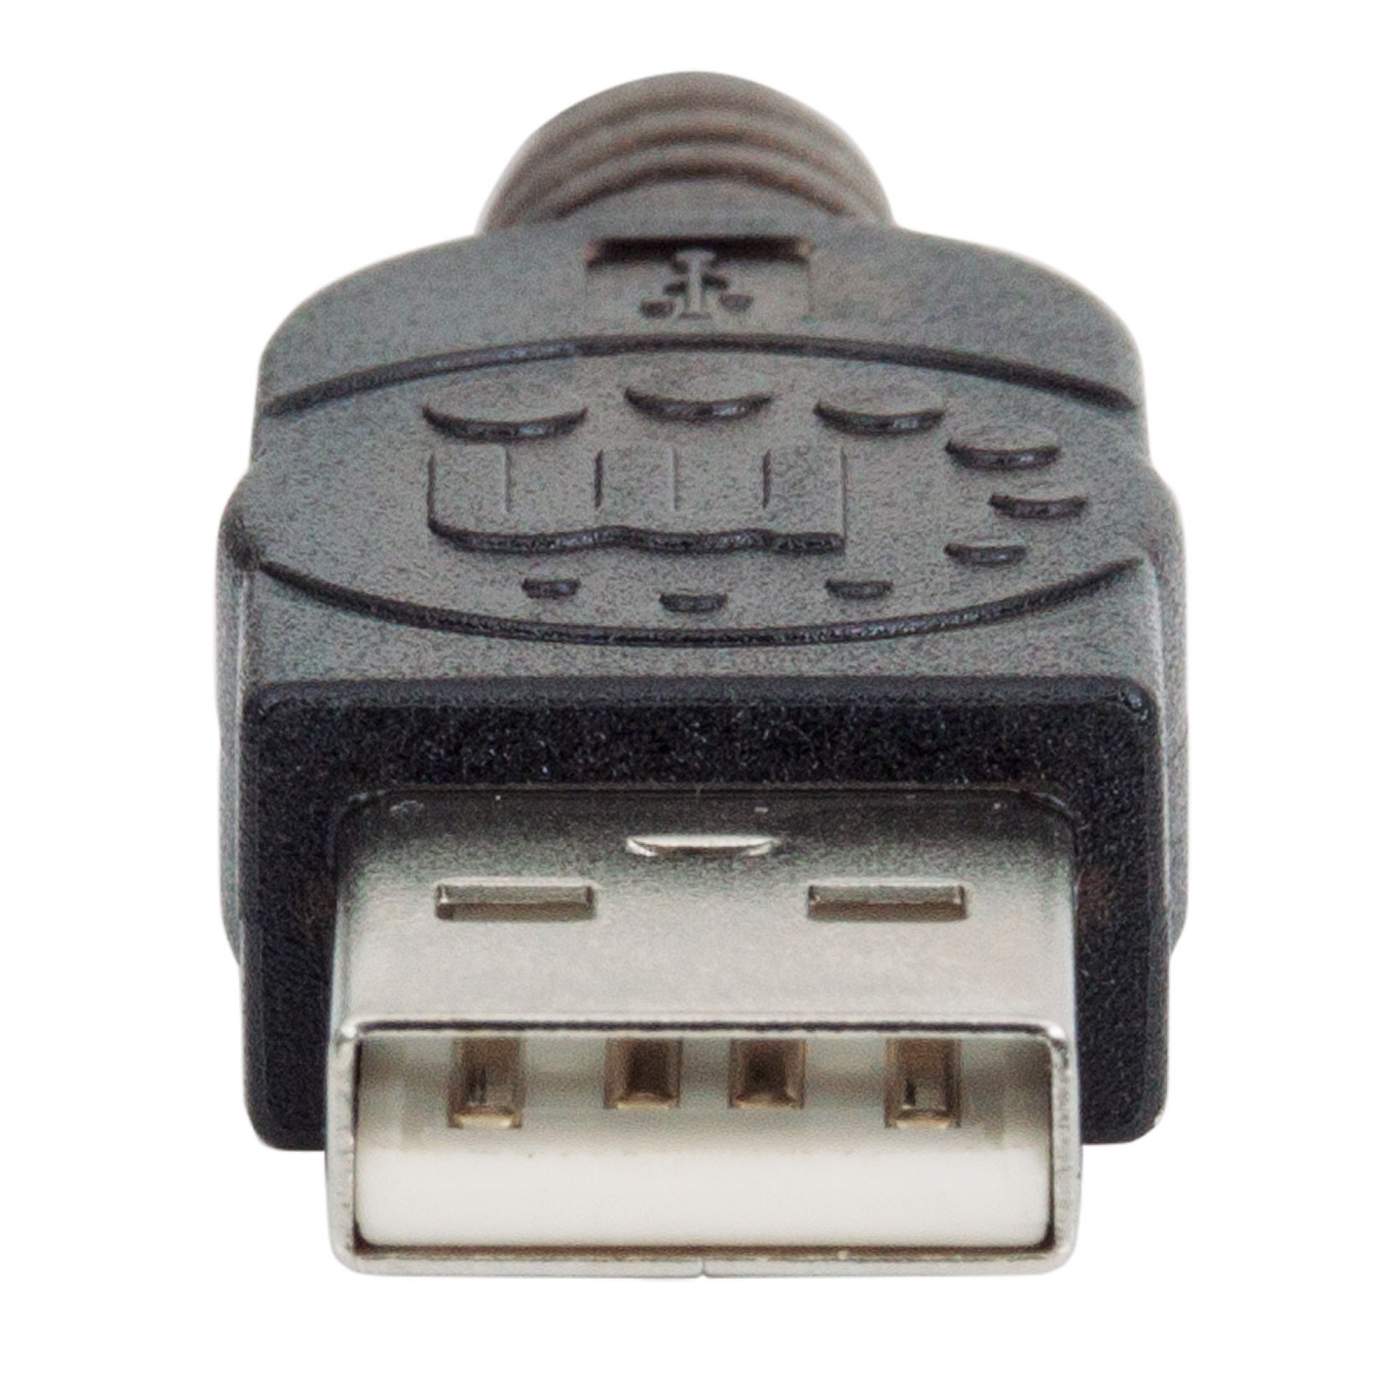 Apantac USB 2.0 Extender up to 115' (35 m) USB-EXT-1 B&H Photo